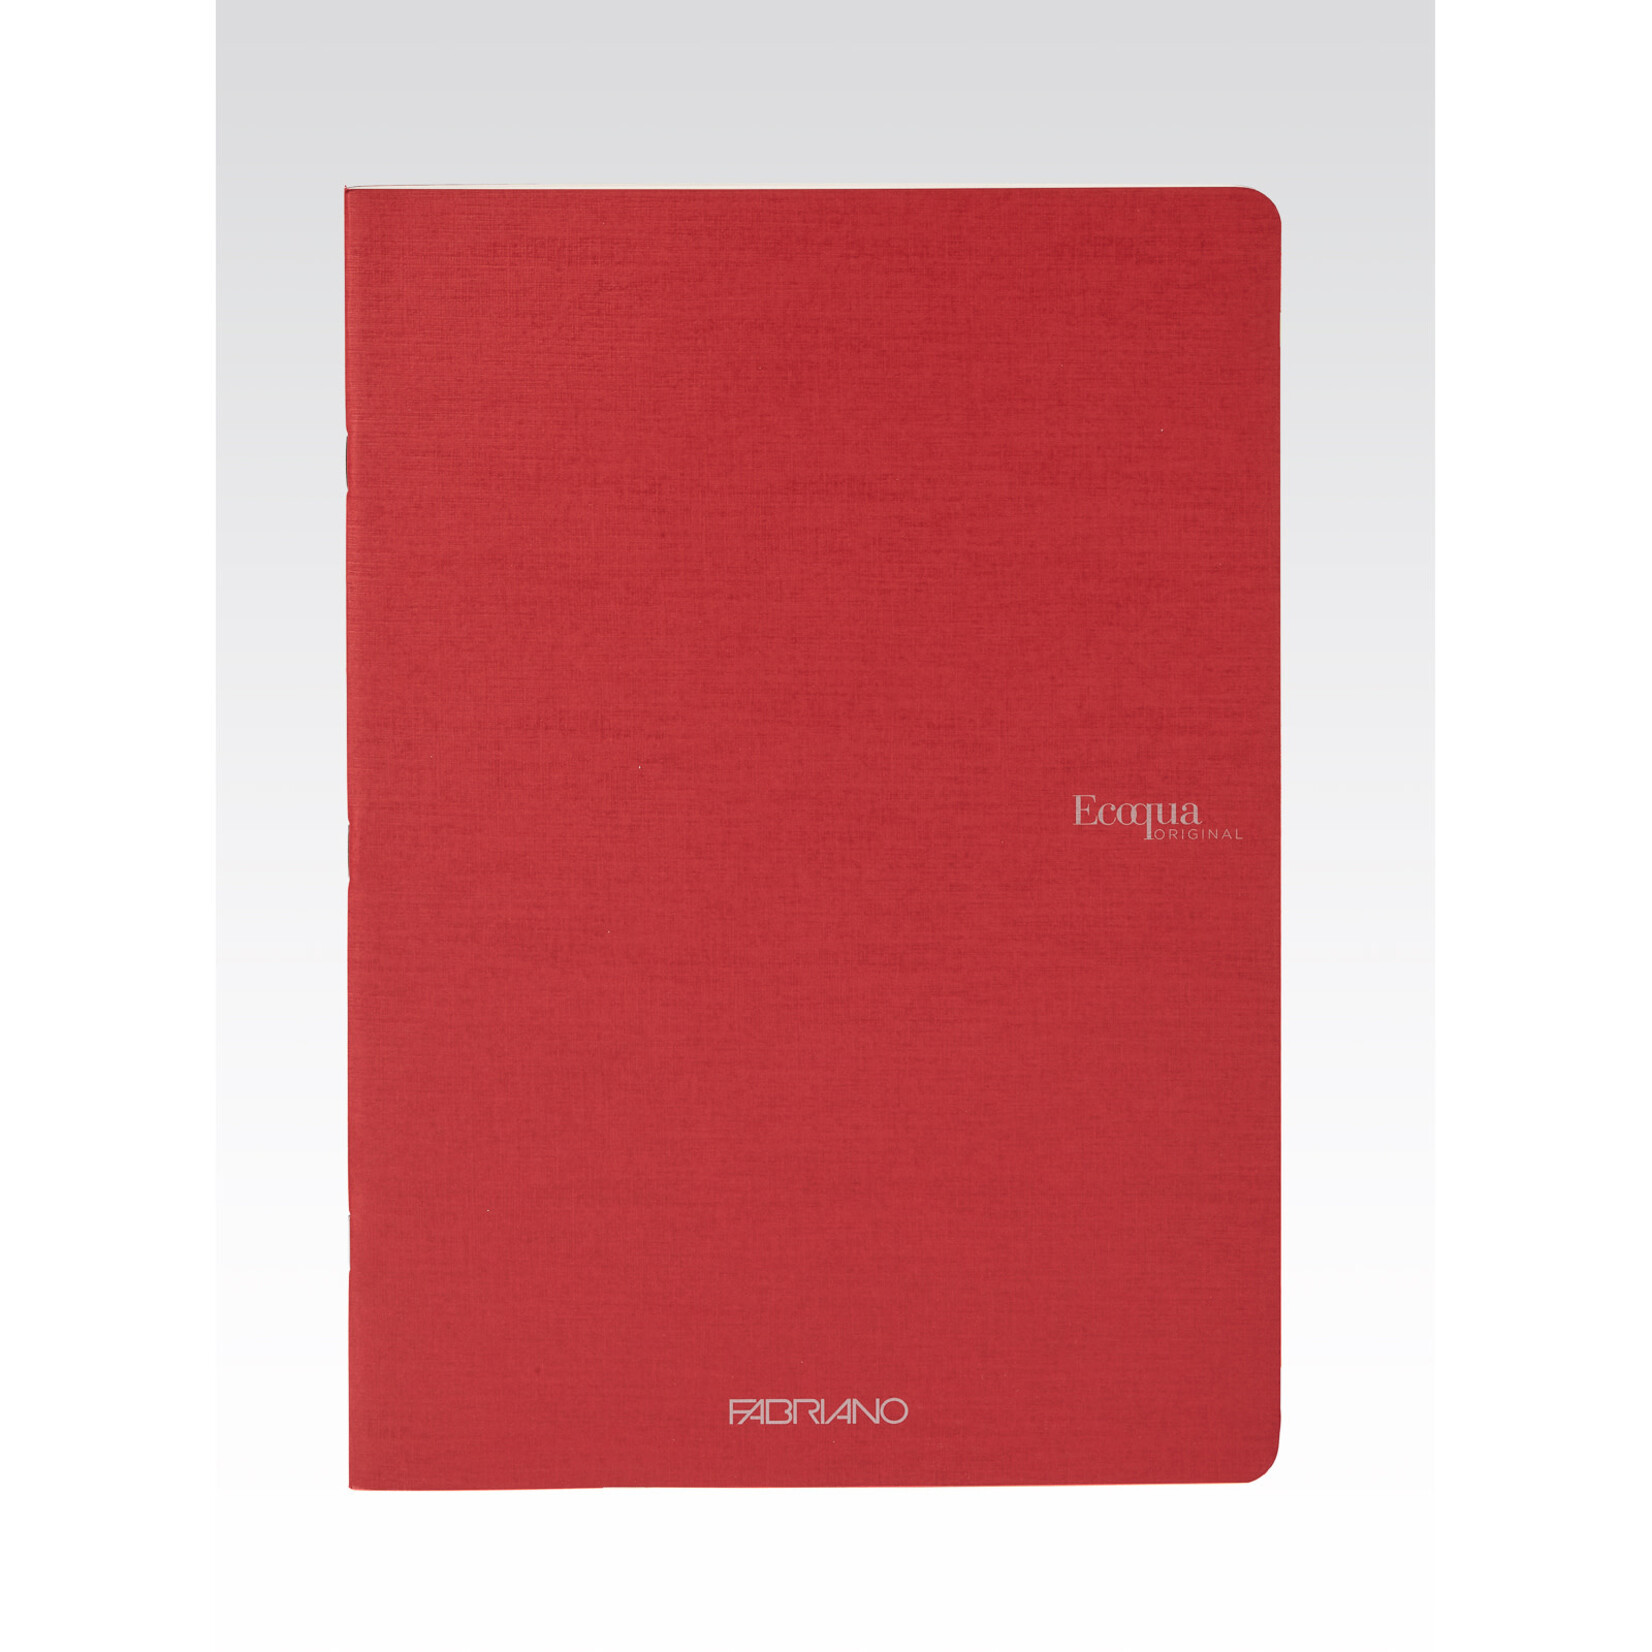 Fabriano Ecoqua Original Staple-Bound Notebooks, 5.8" x 8.3" (A5) - Blank, Cherry - 40 Shts